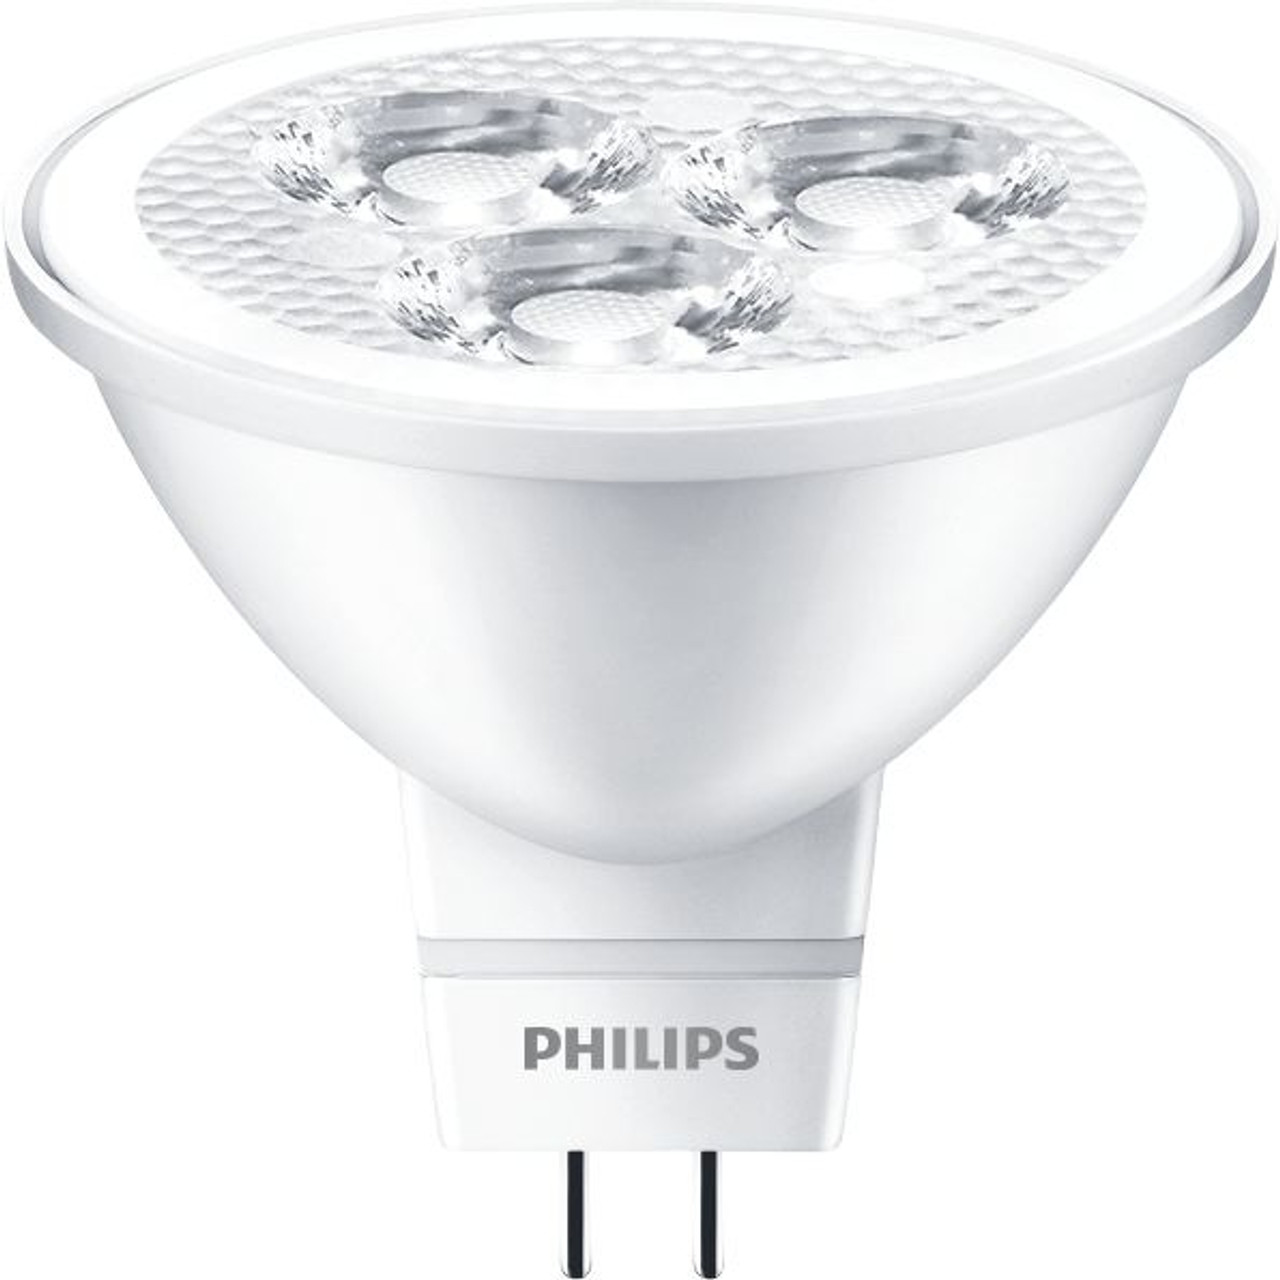 Philips Lighting CorePro LED 3-35W MR16 24D CN LED Spots